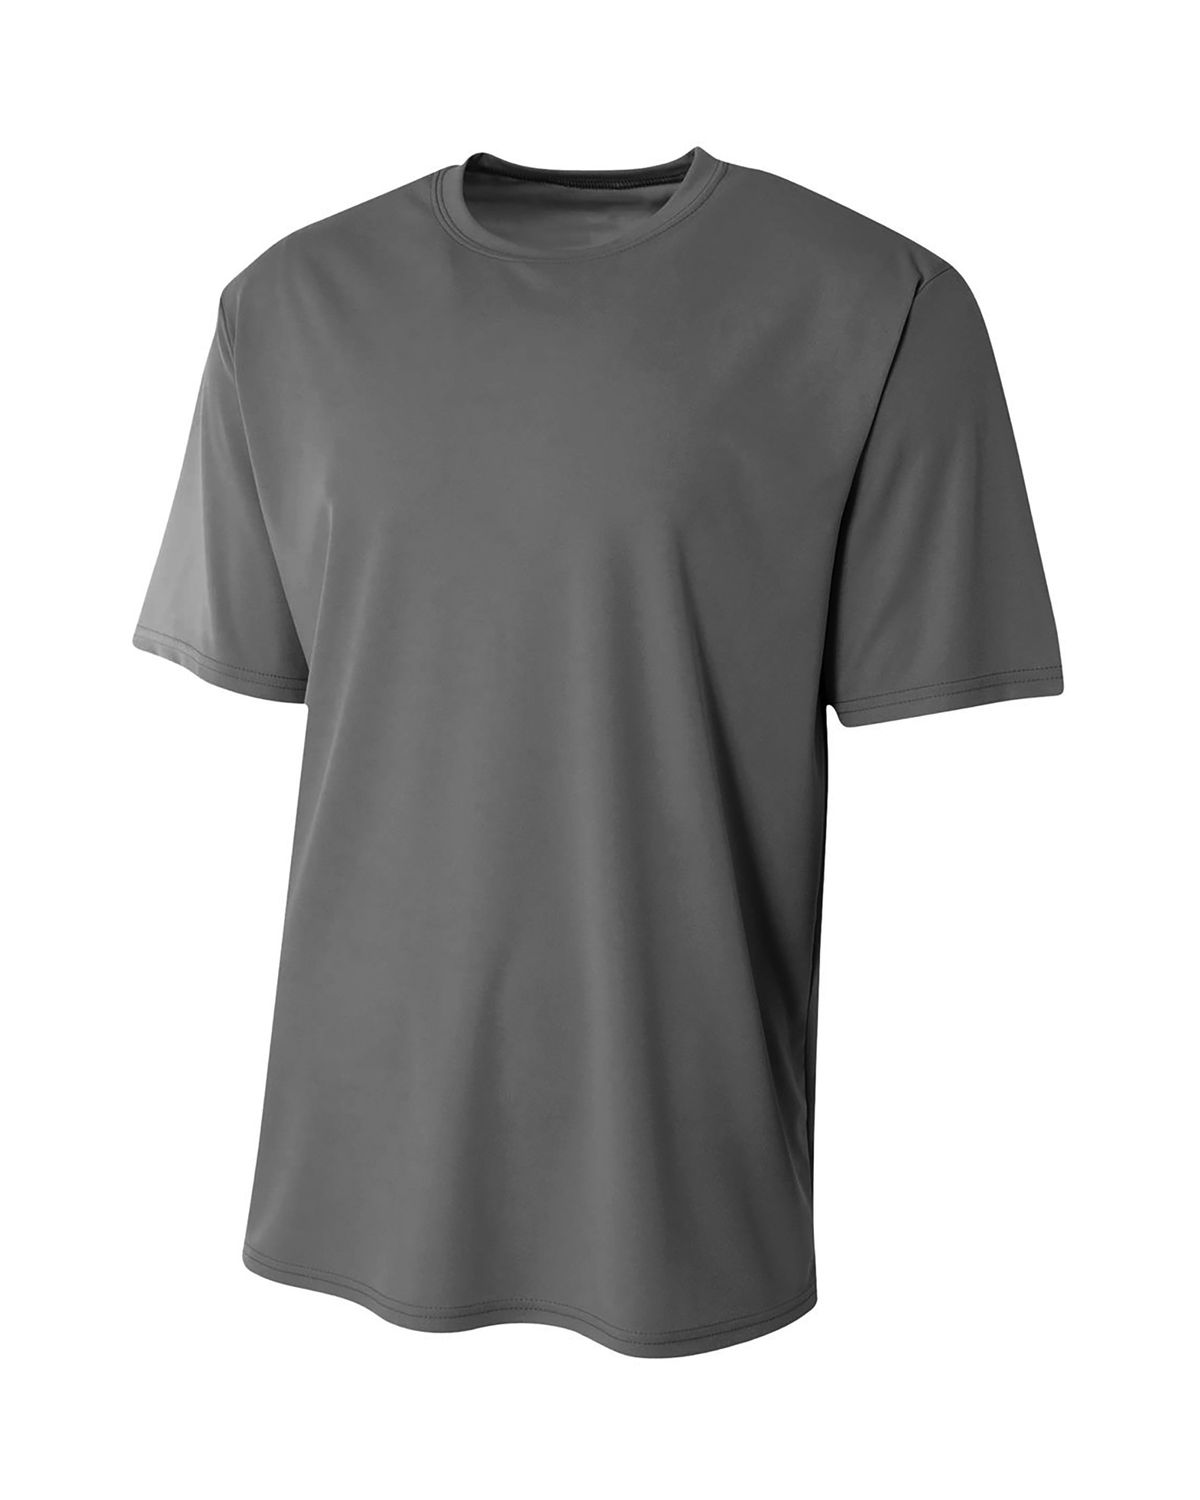 'A4 N3234 Adult Performance Marathon T-Shirt'